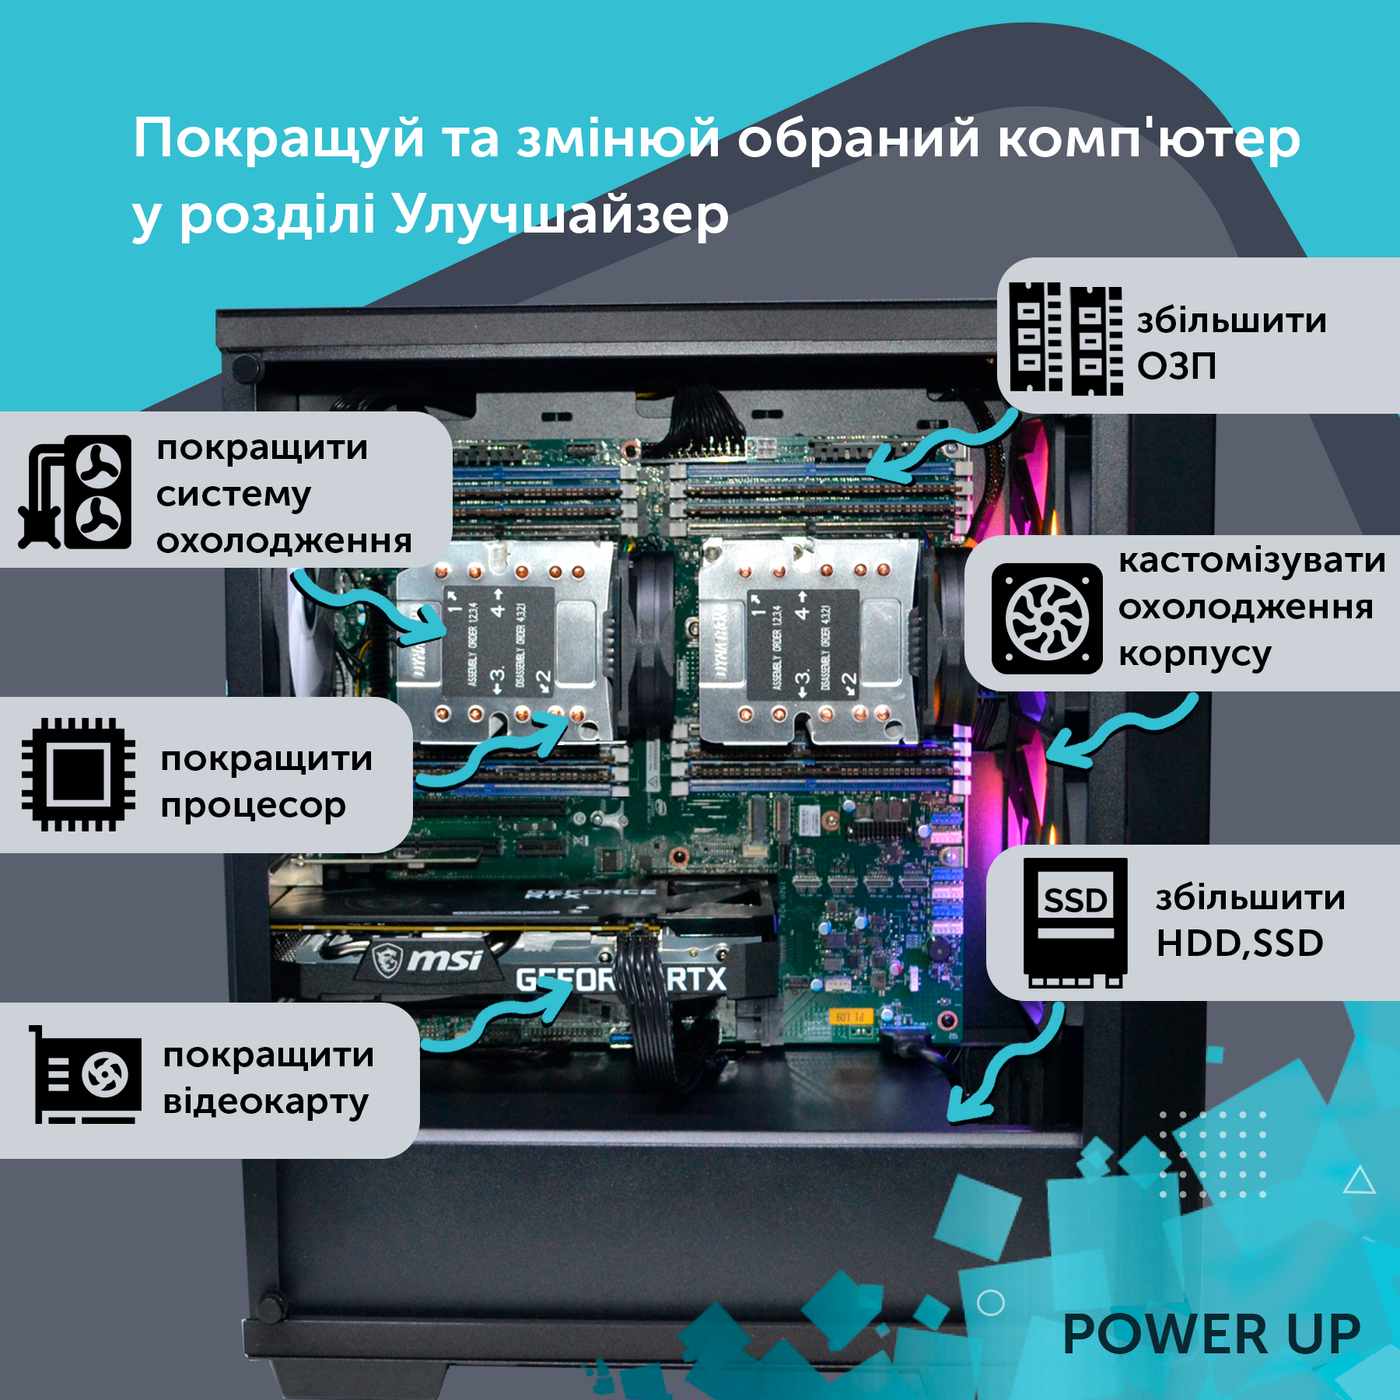 Рабочая станция PowerUp Desktop #328 Core i5 14600K/32 GB/SSD 1TB/GeForce RTX 4060Ti 16GB